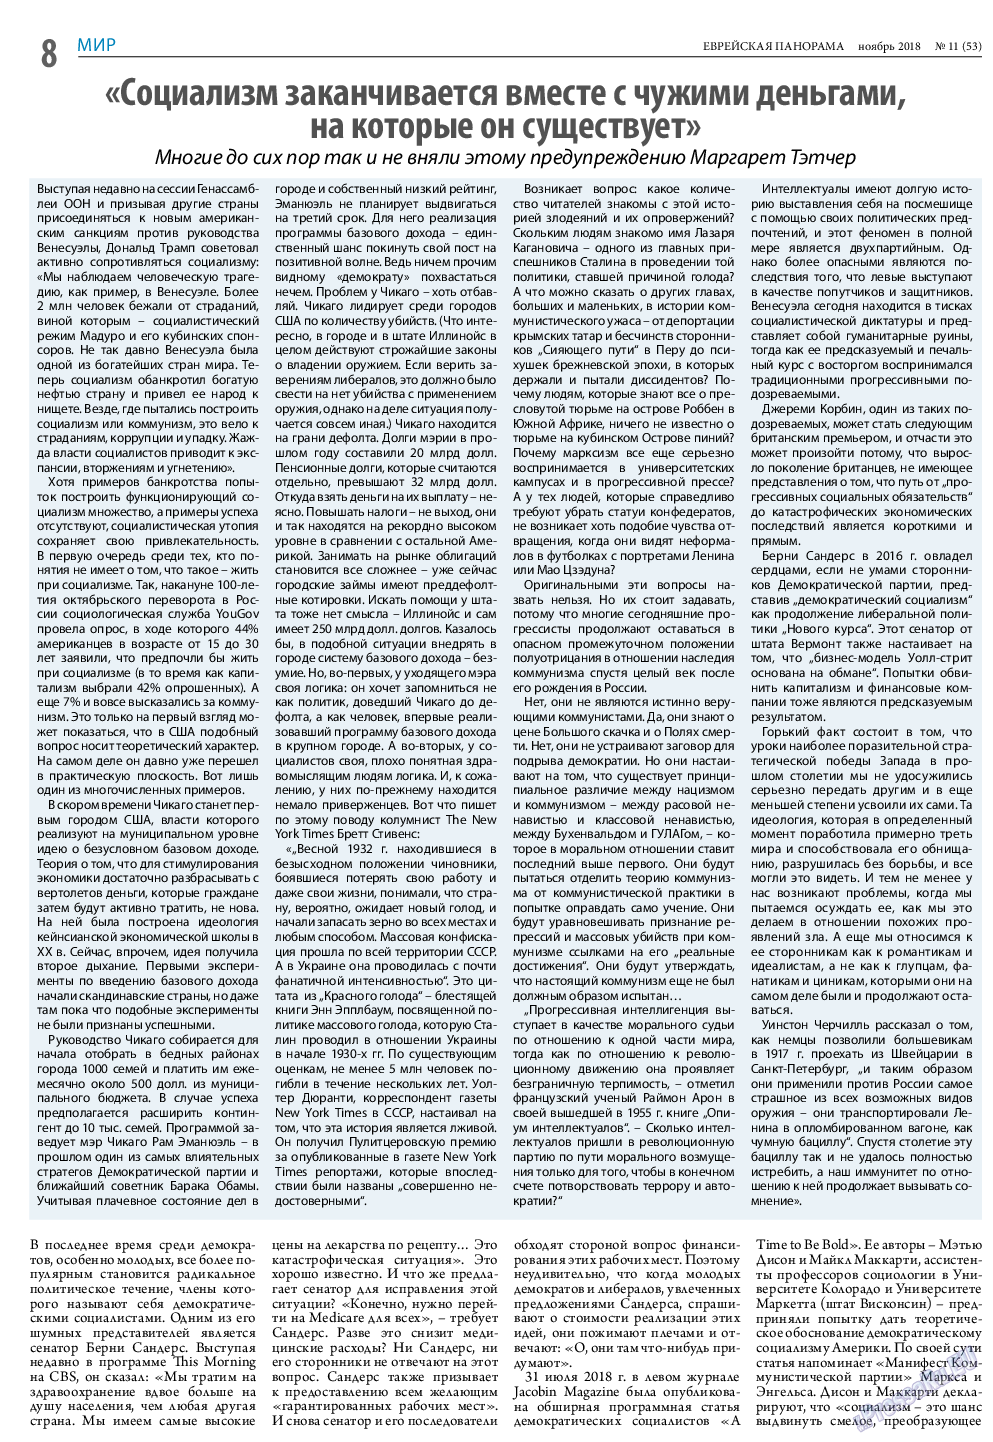 Еврейская панорама, газета. 2018 №11 стр.8